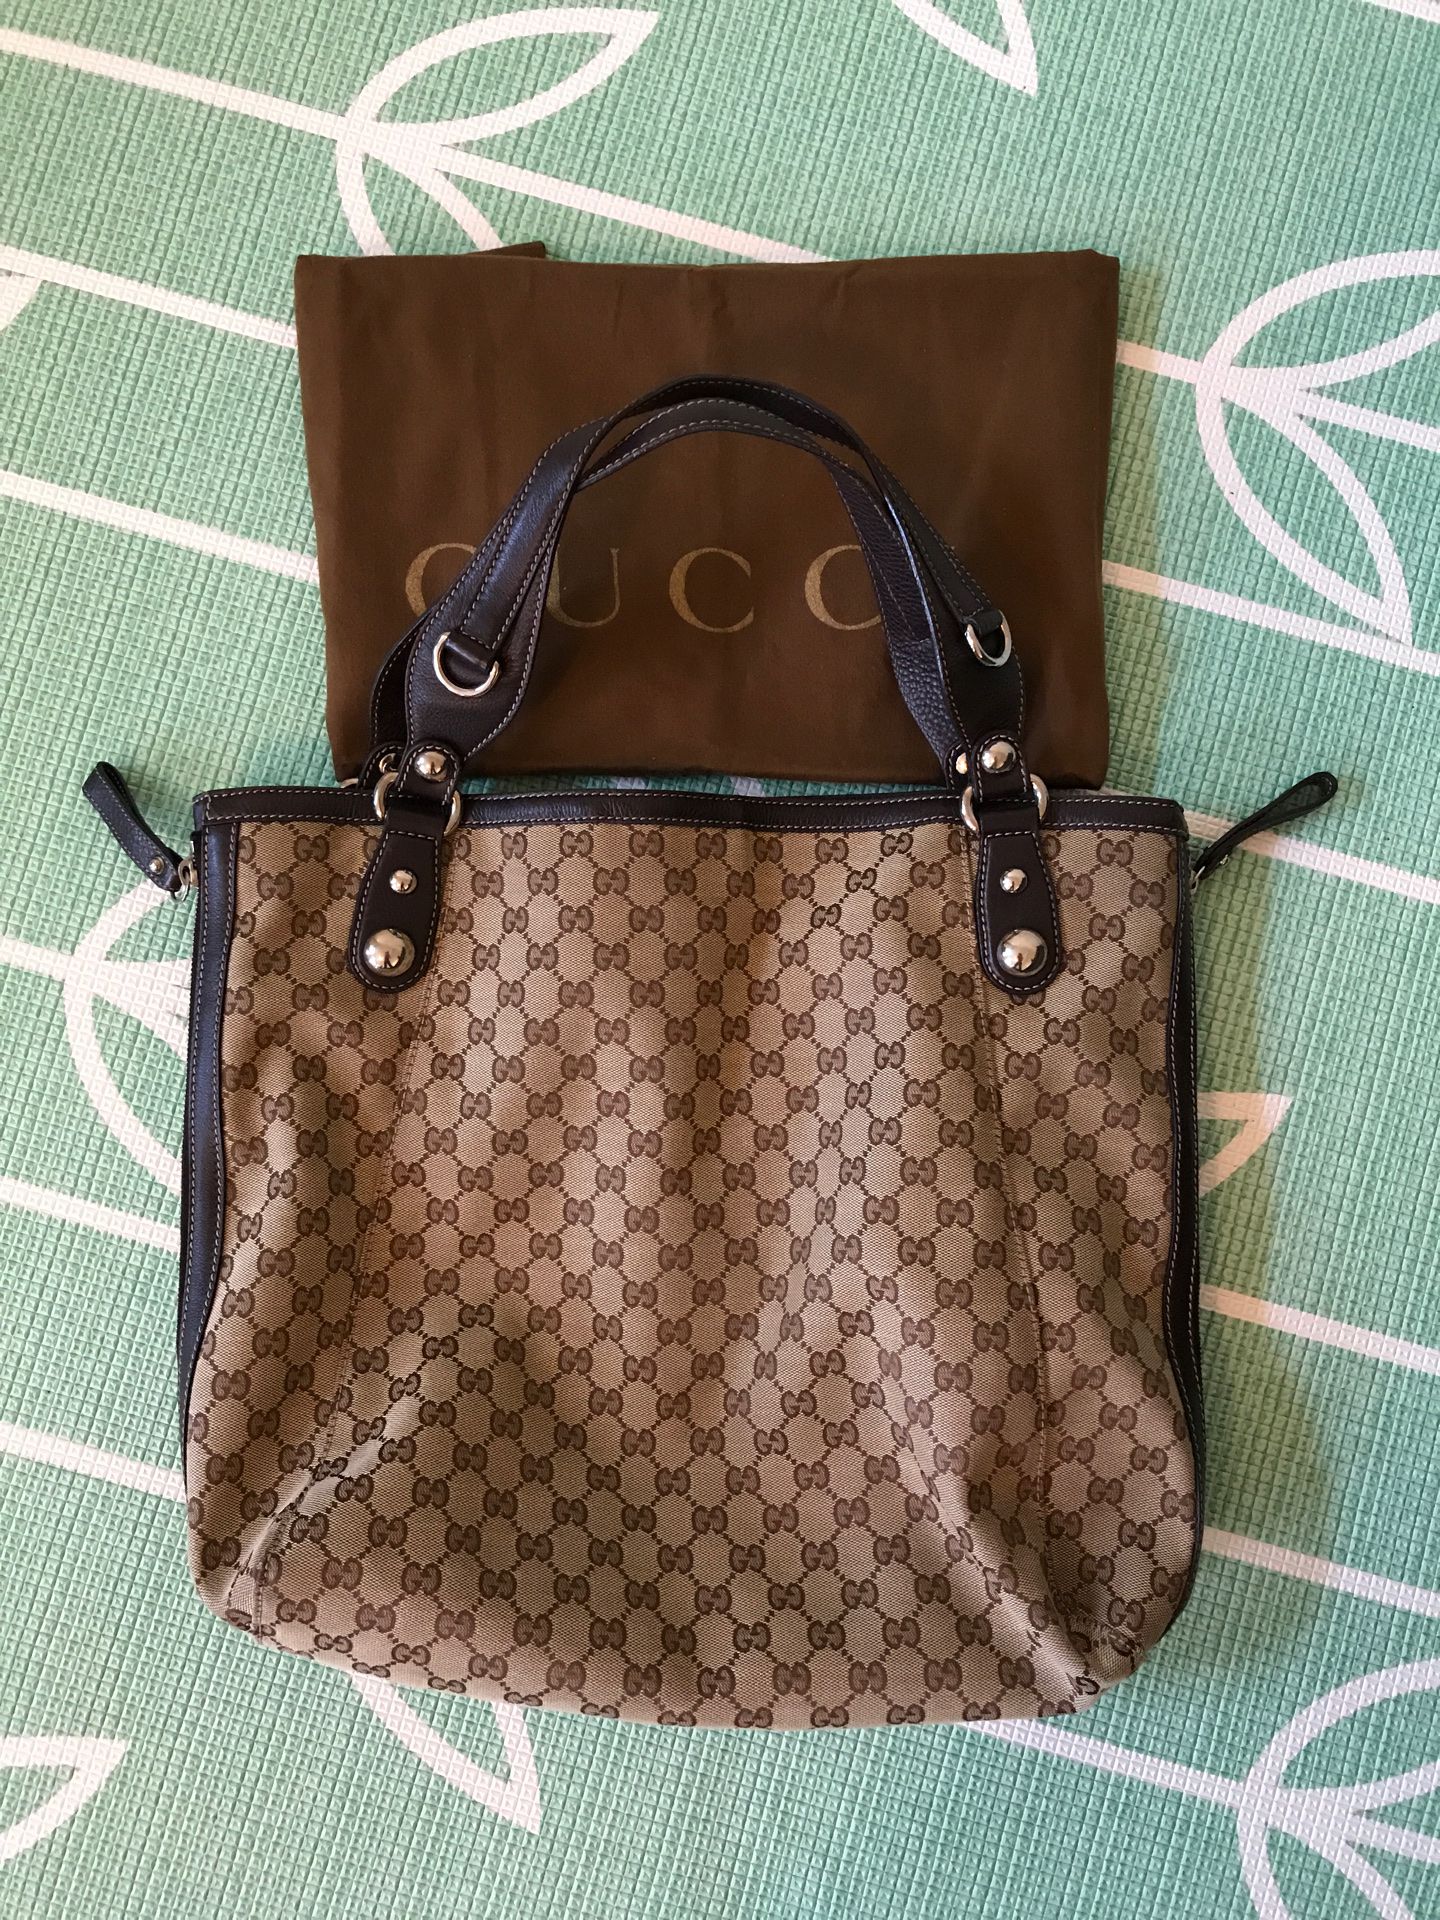 Gucci Expandable Tote Bag